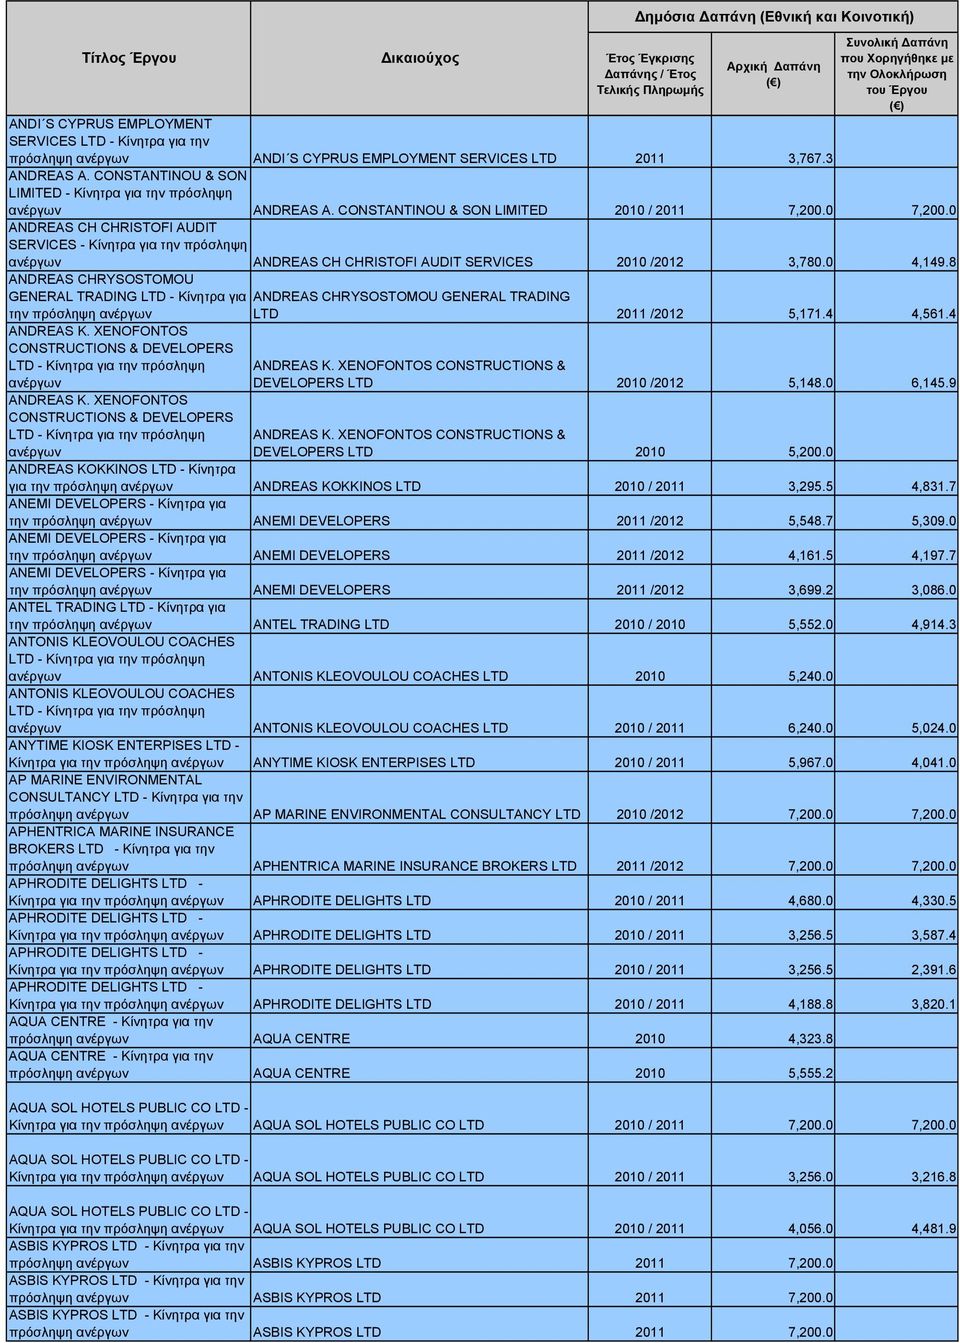 8 ANDREAS CHRYSOSTOMOU GENERAL TRADING LTD - Κίνητρα για ANDREAS CHRYSOSTOMOU GENERAL TRADING την LTD 2011 /2012 5,171.4 4,561.4 ANDREAS K. XENOFONTOS CONSTRUCTIONS & DEVELOPERS ανέργων ANDREAS K.